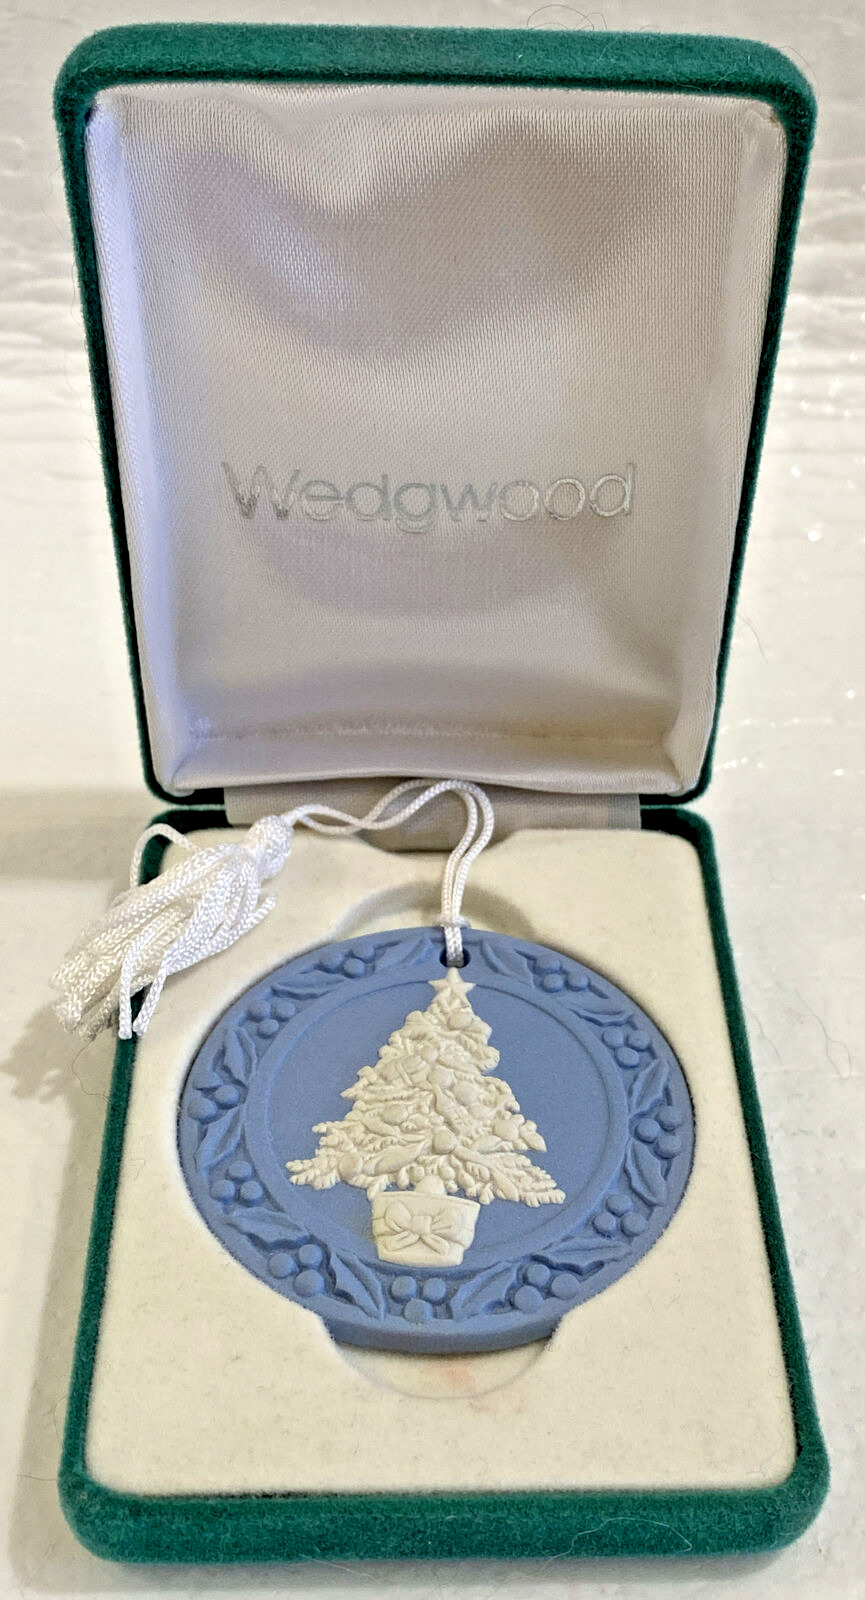 Wedgwood Blue & White Jasperware Christmas Tree -Disc Ornament 1988 in Case